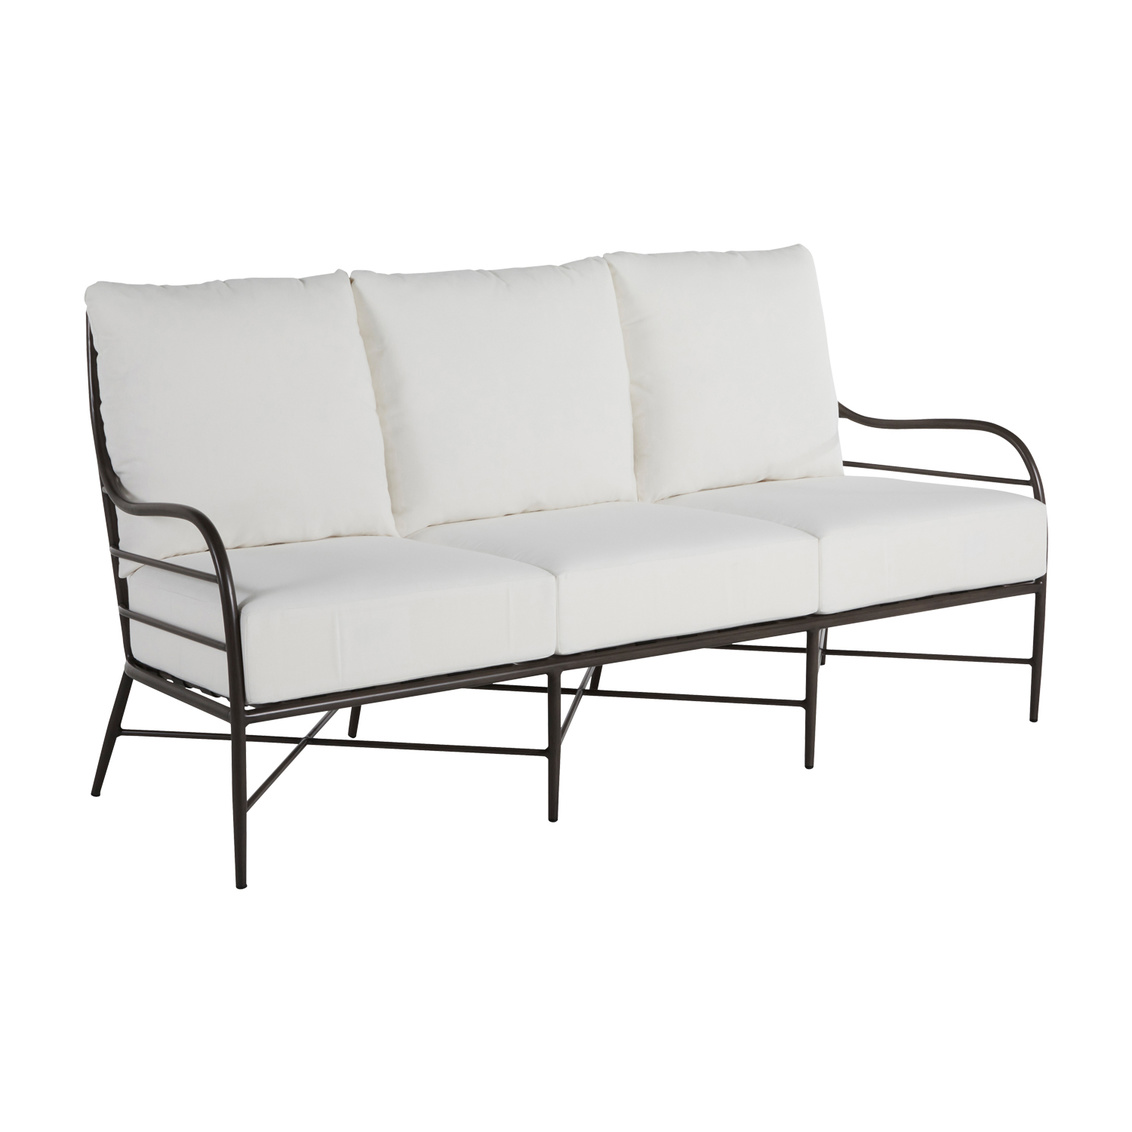 carmel aluminum sofa in slate grey – frame only product image